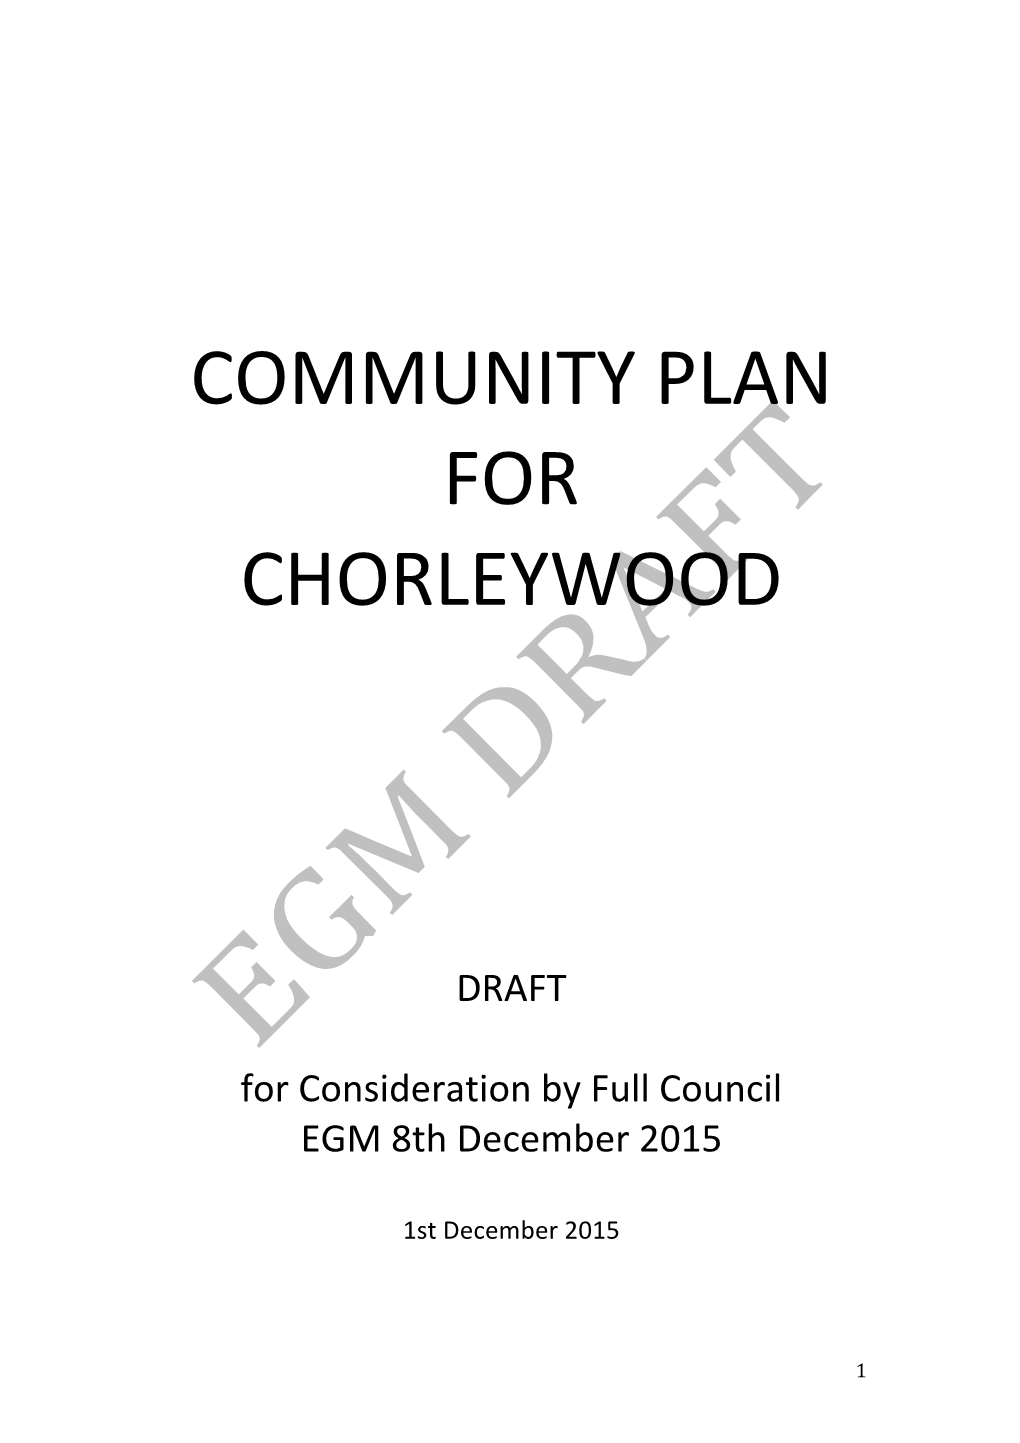 Community Plan for Chorleywood